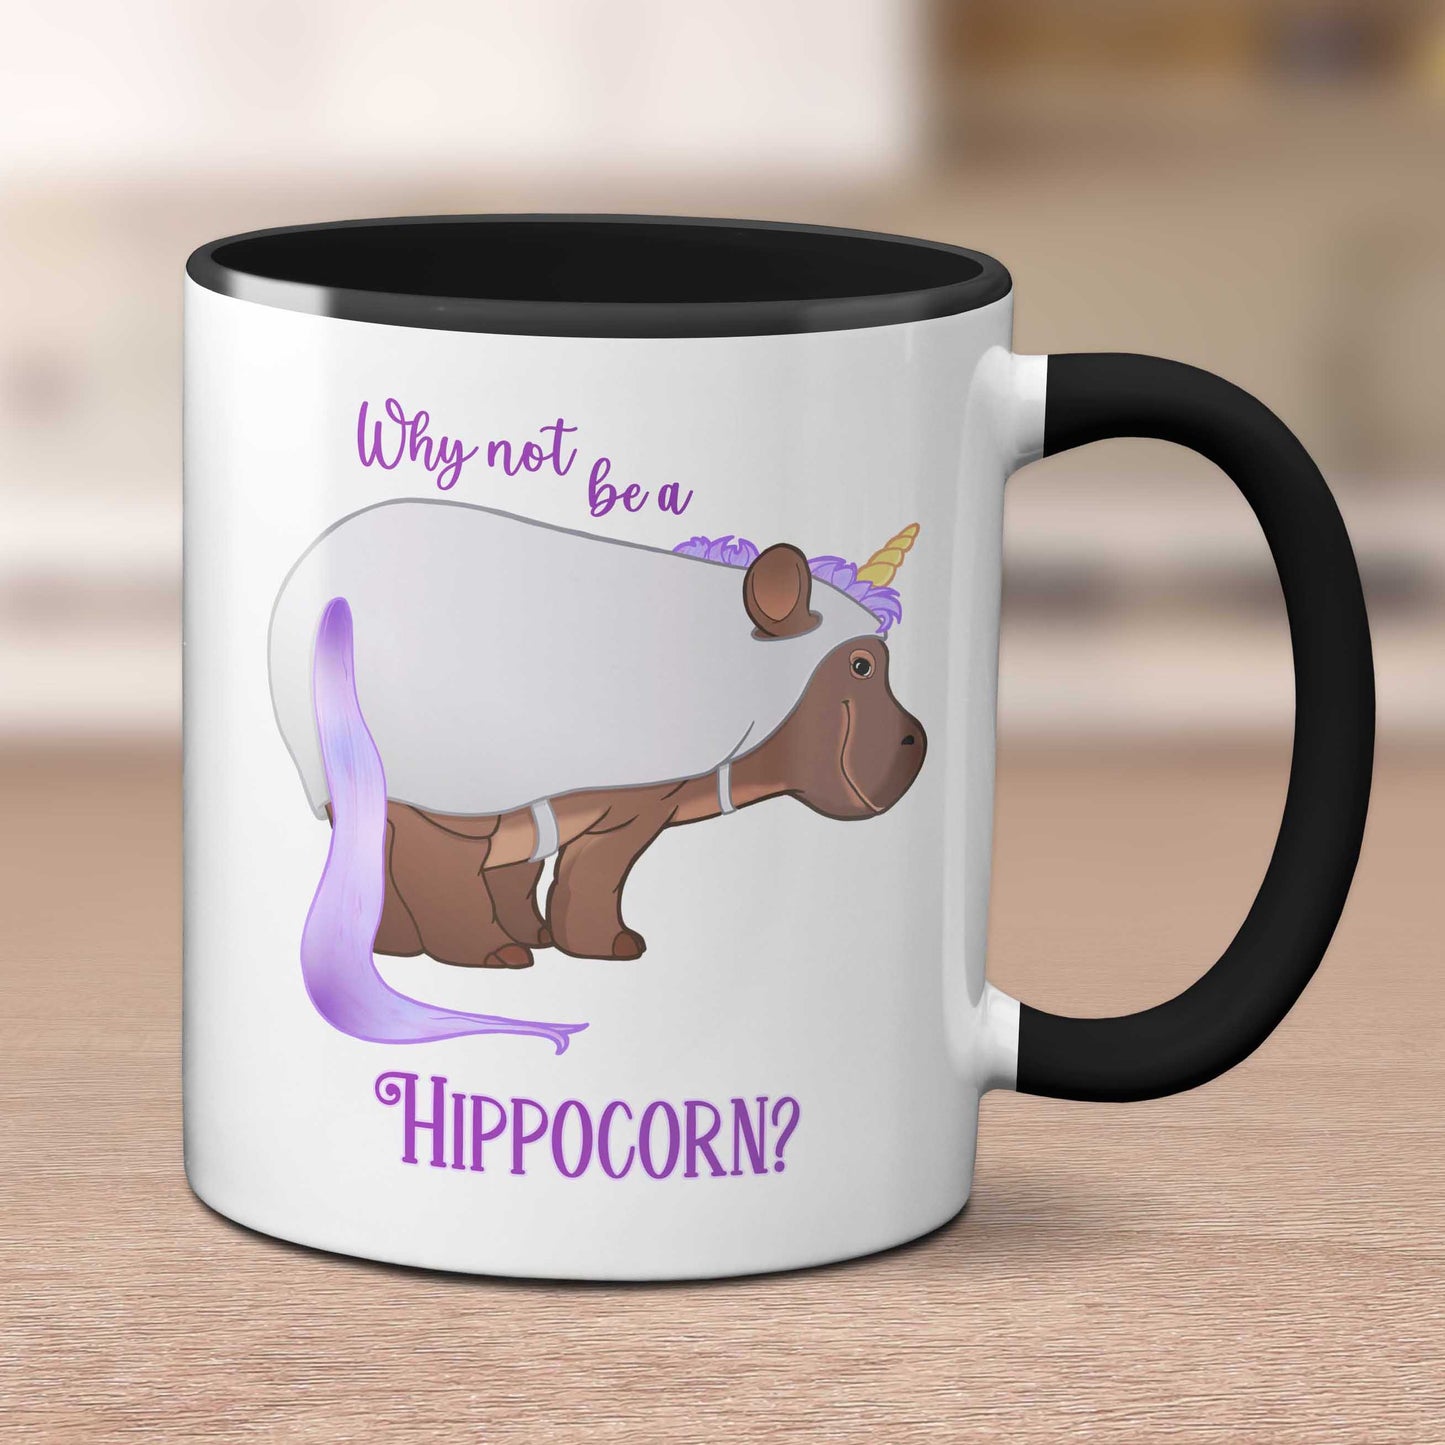 Dash the Hippocorn Mug in two sizes